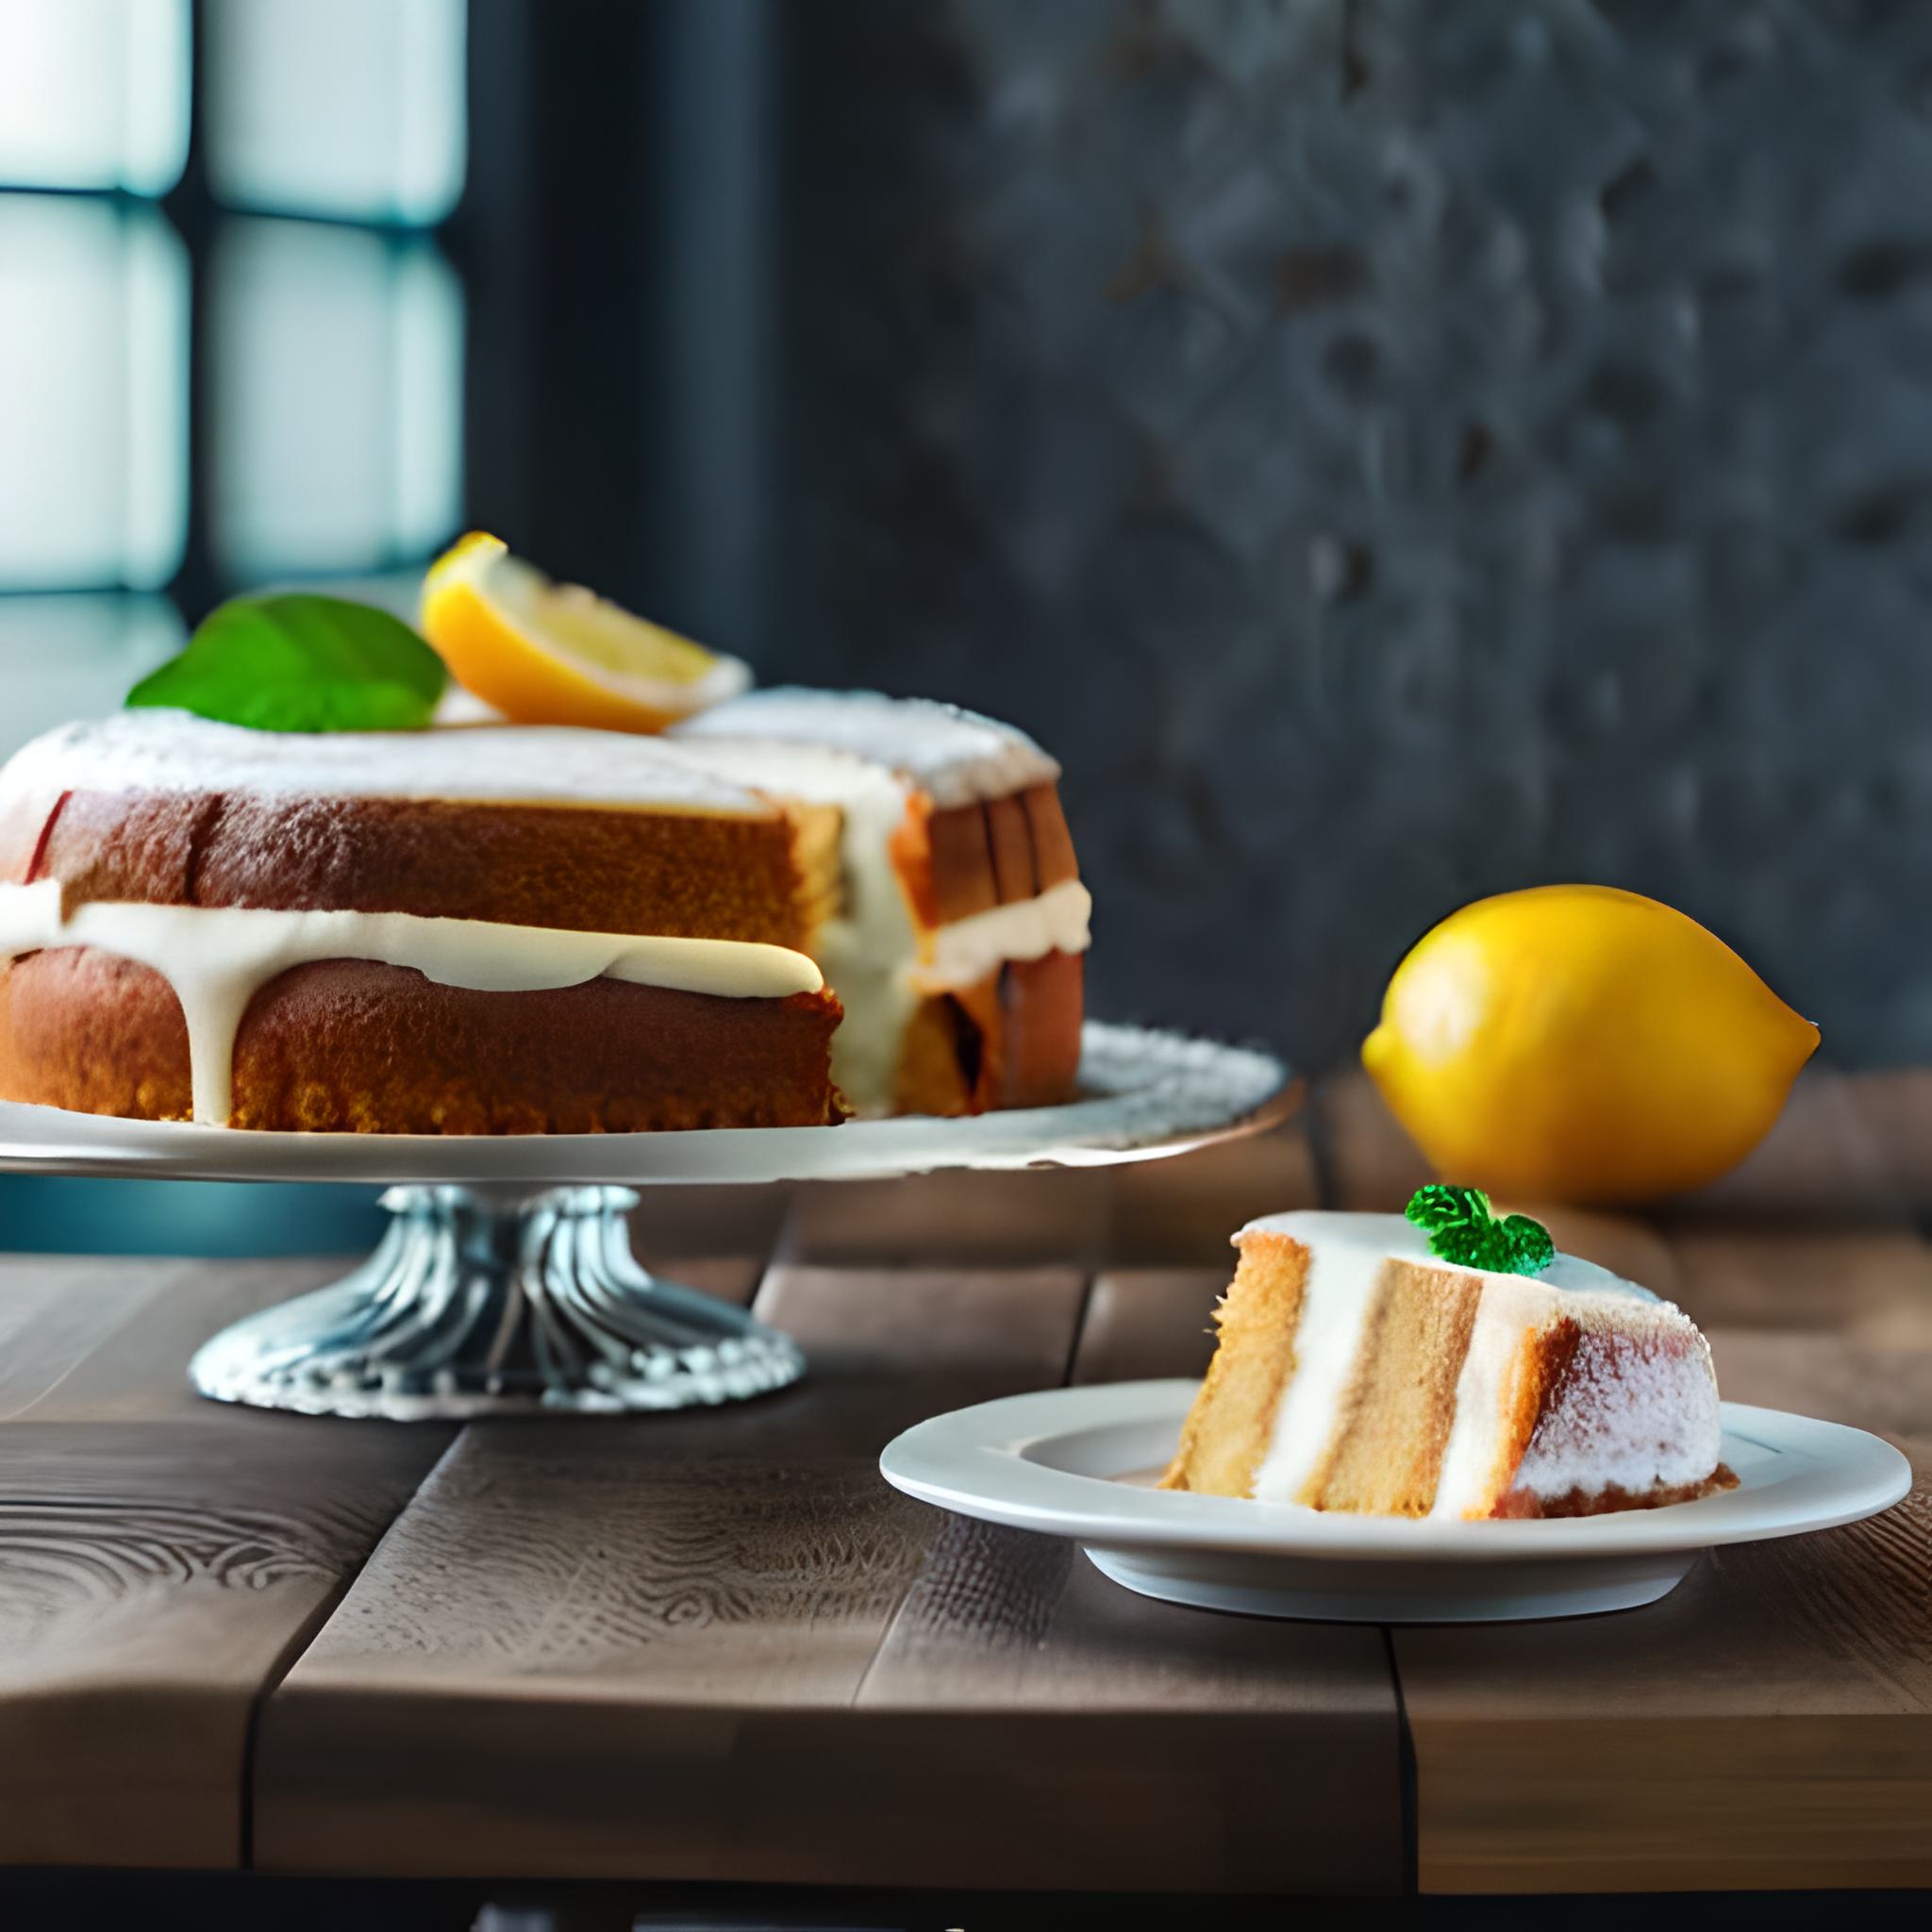 Lemon Cake Recipe: How to make lemon cake at home